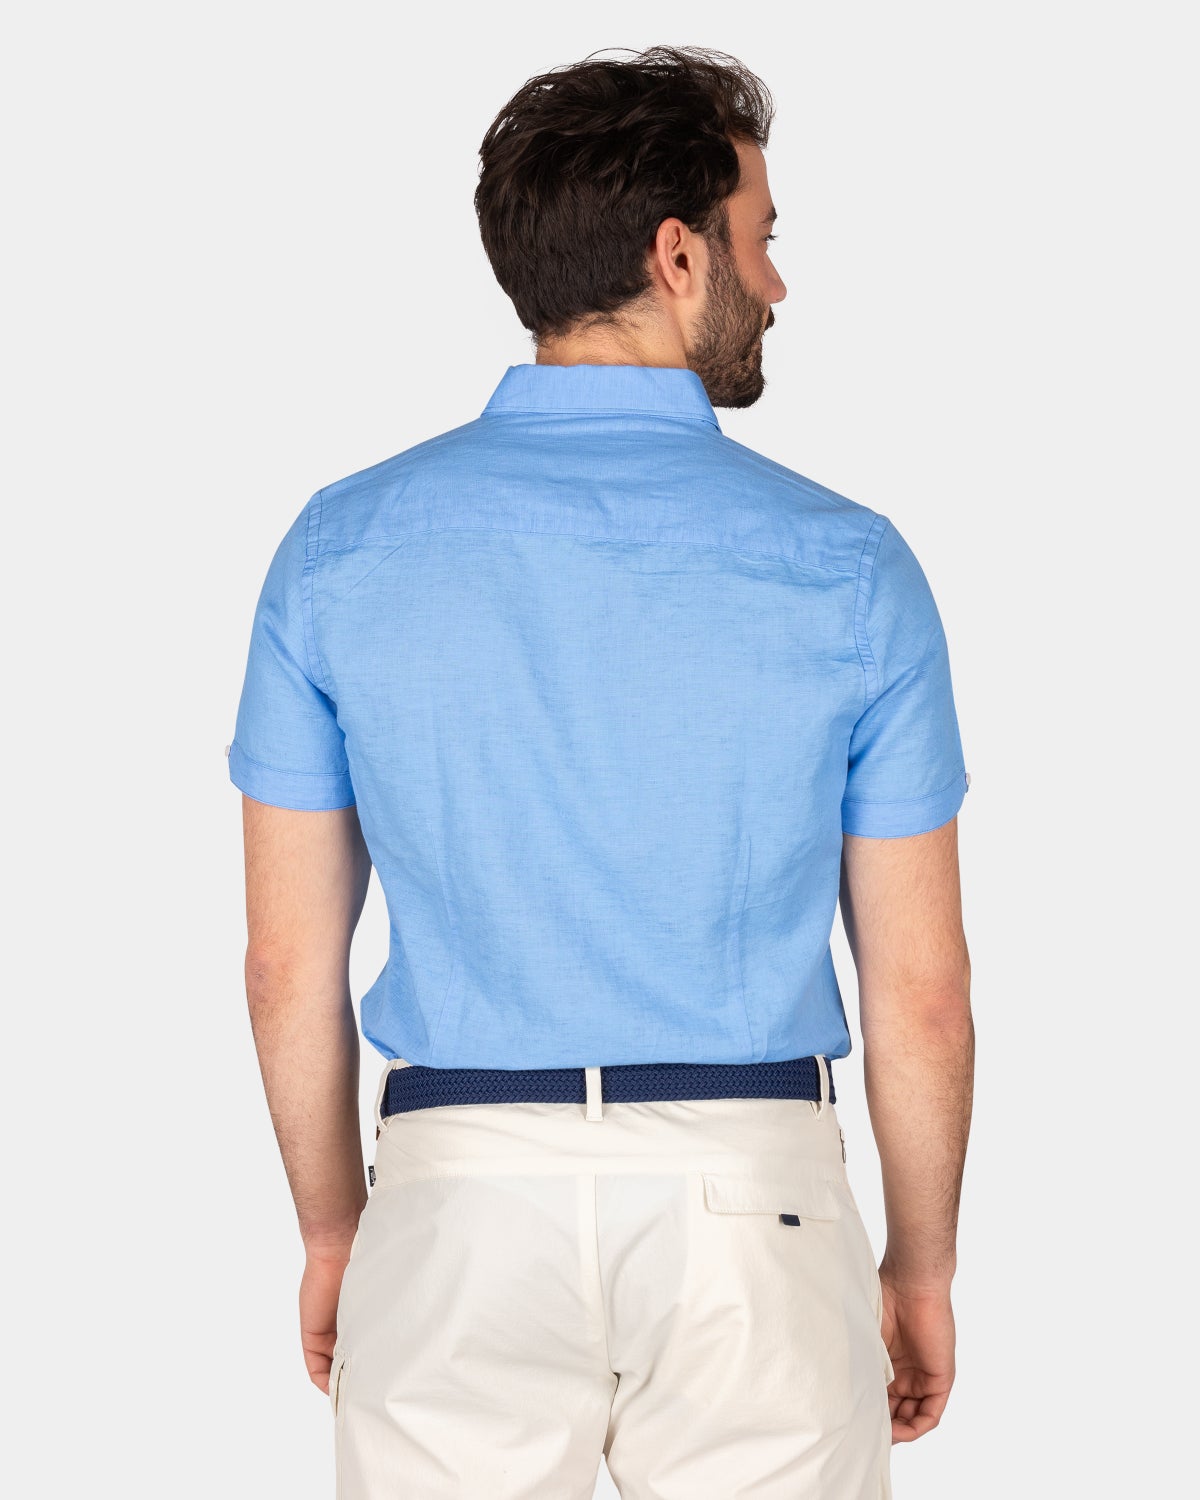 Plain shirt short sleeves - Bed Blue